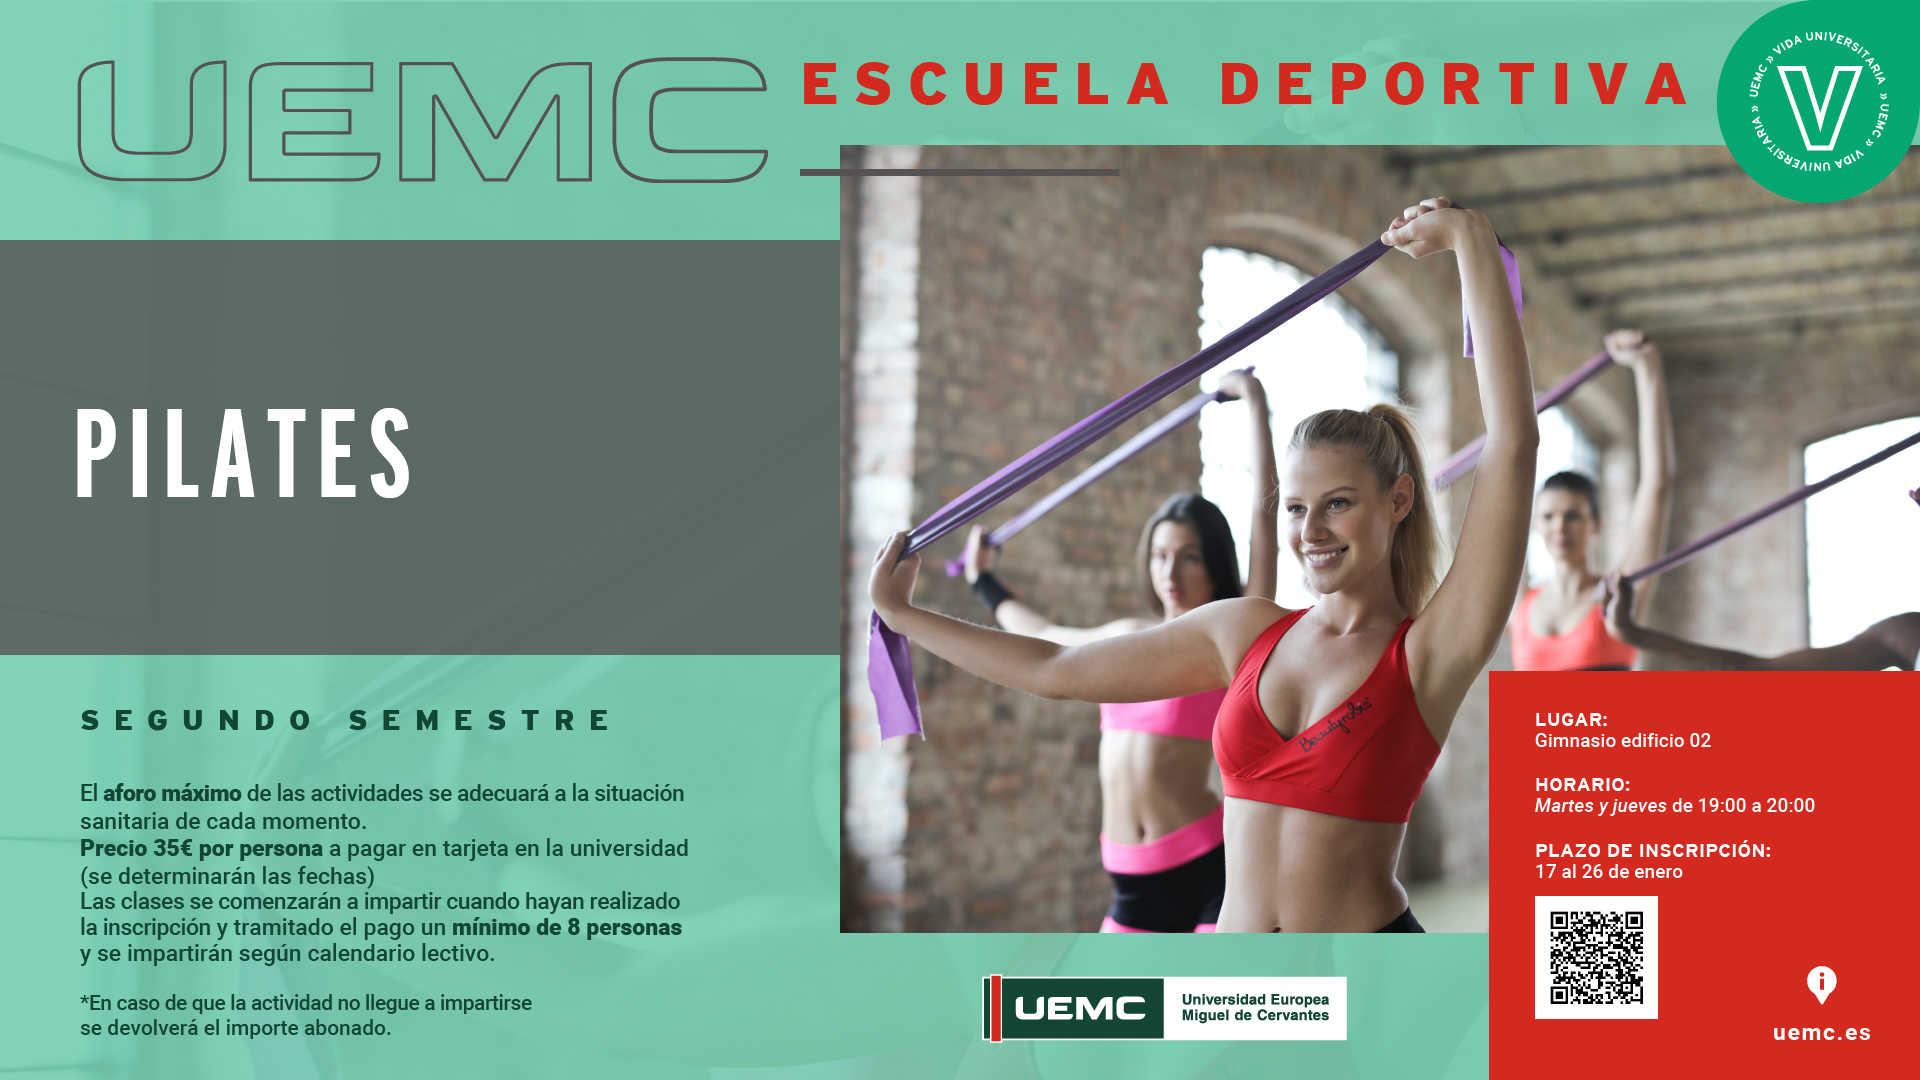 22Horizontal-UEMC_ESCUELA-DEPORTIVA-Pilates